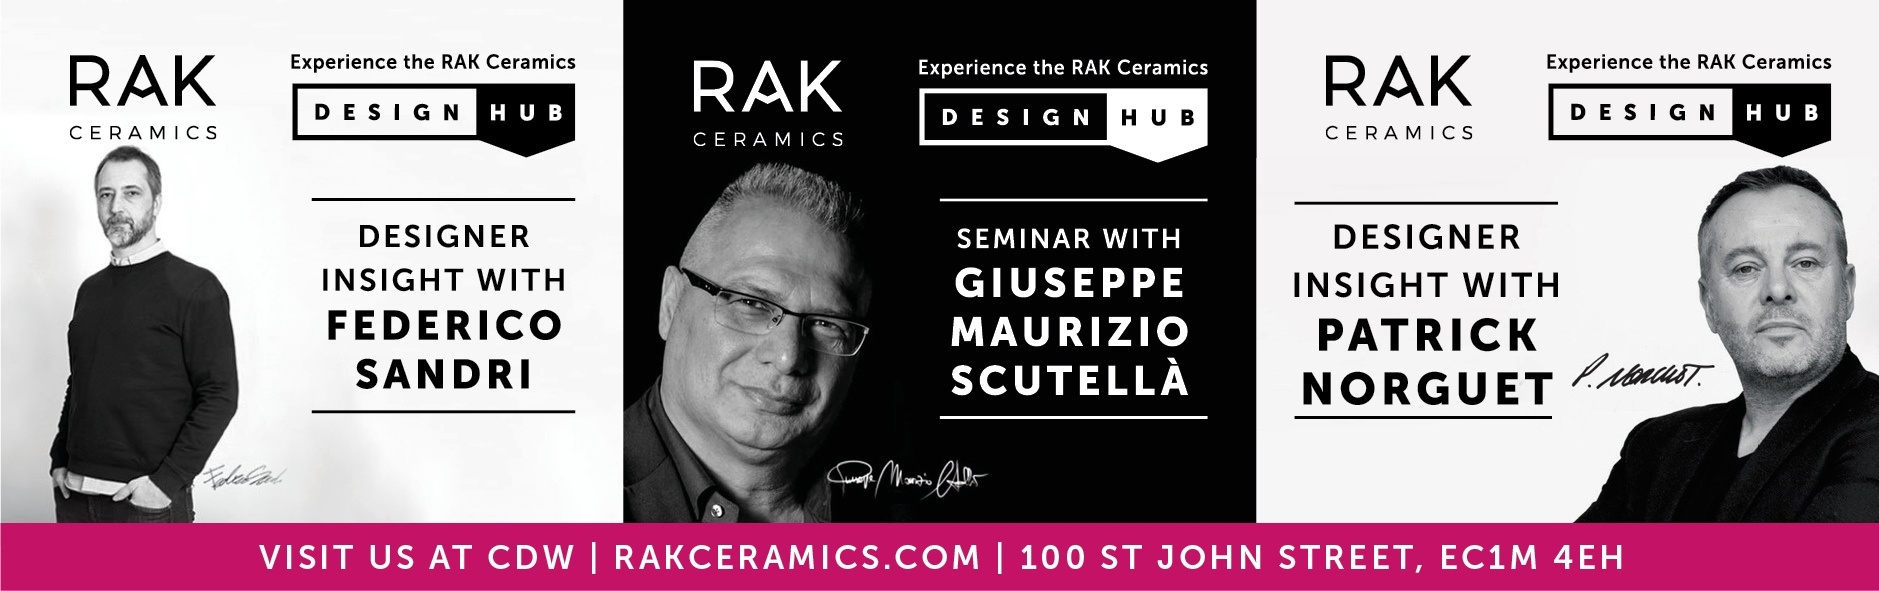 design hub, New London Design Hub for RAK Ceramics Set to Open